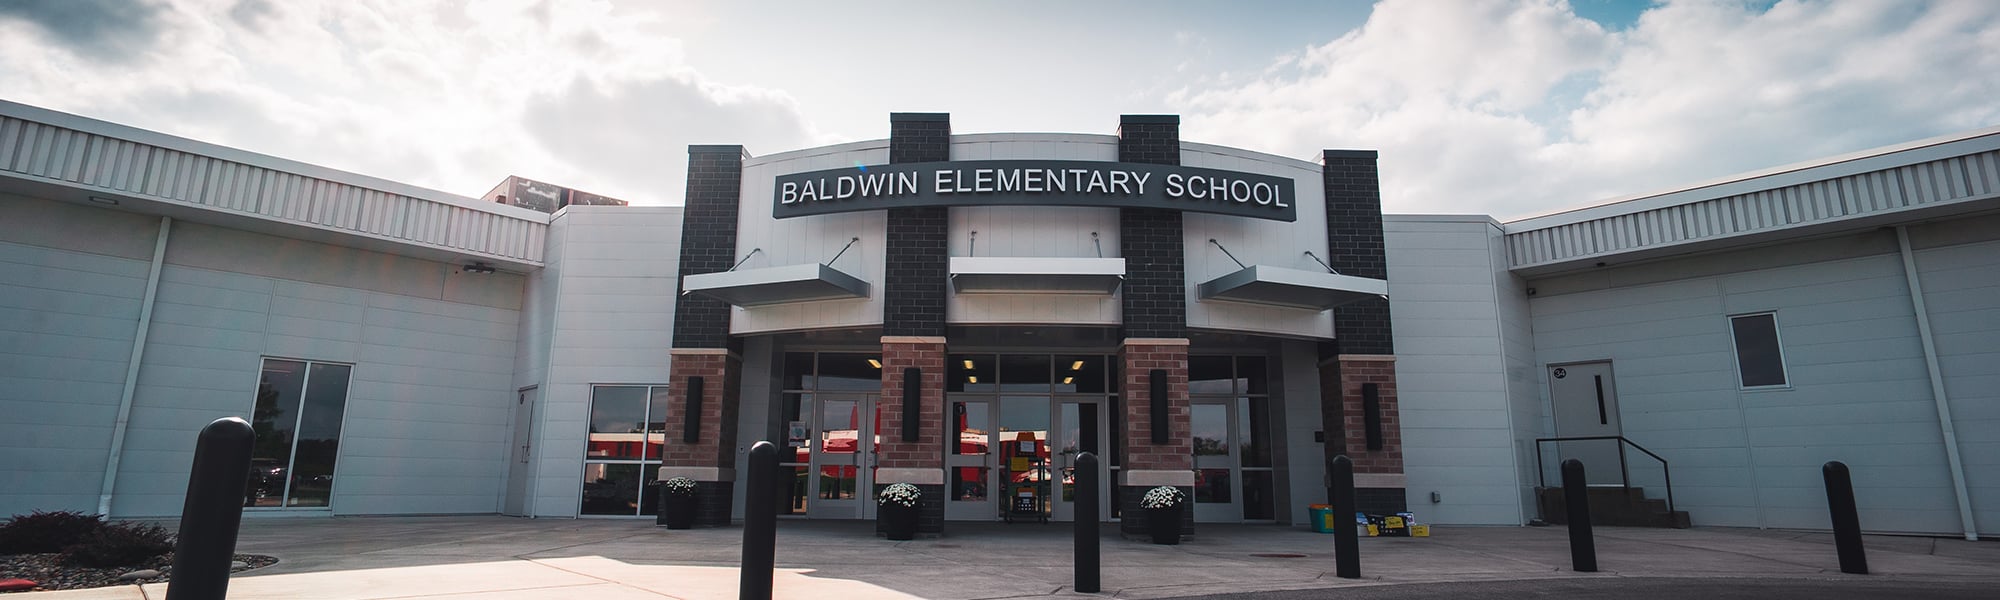 Baldwin Elementary School - Quincy IL